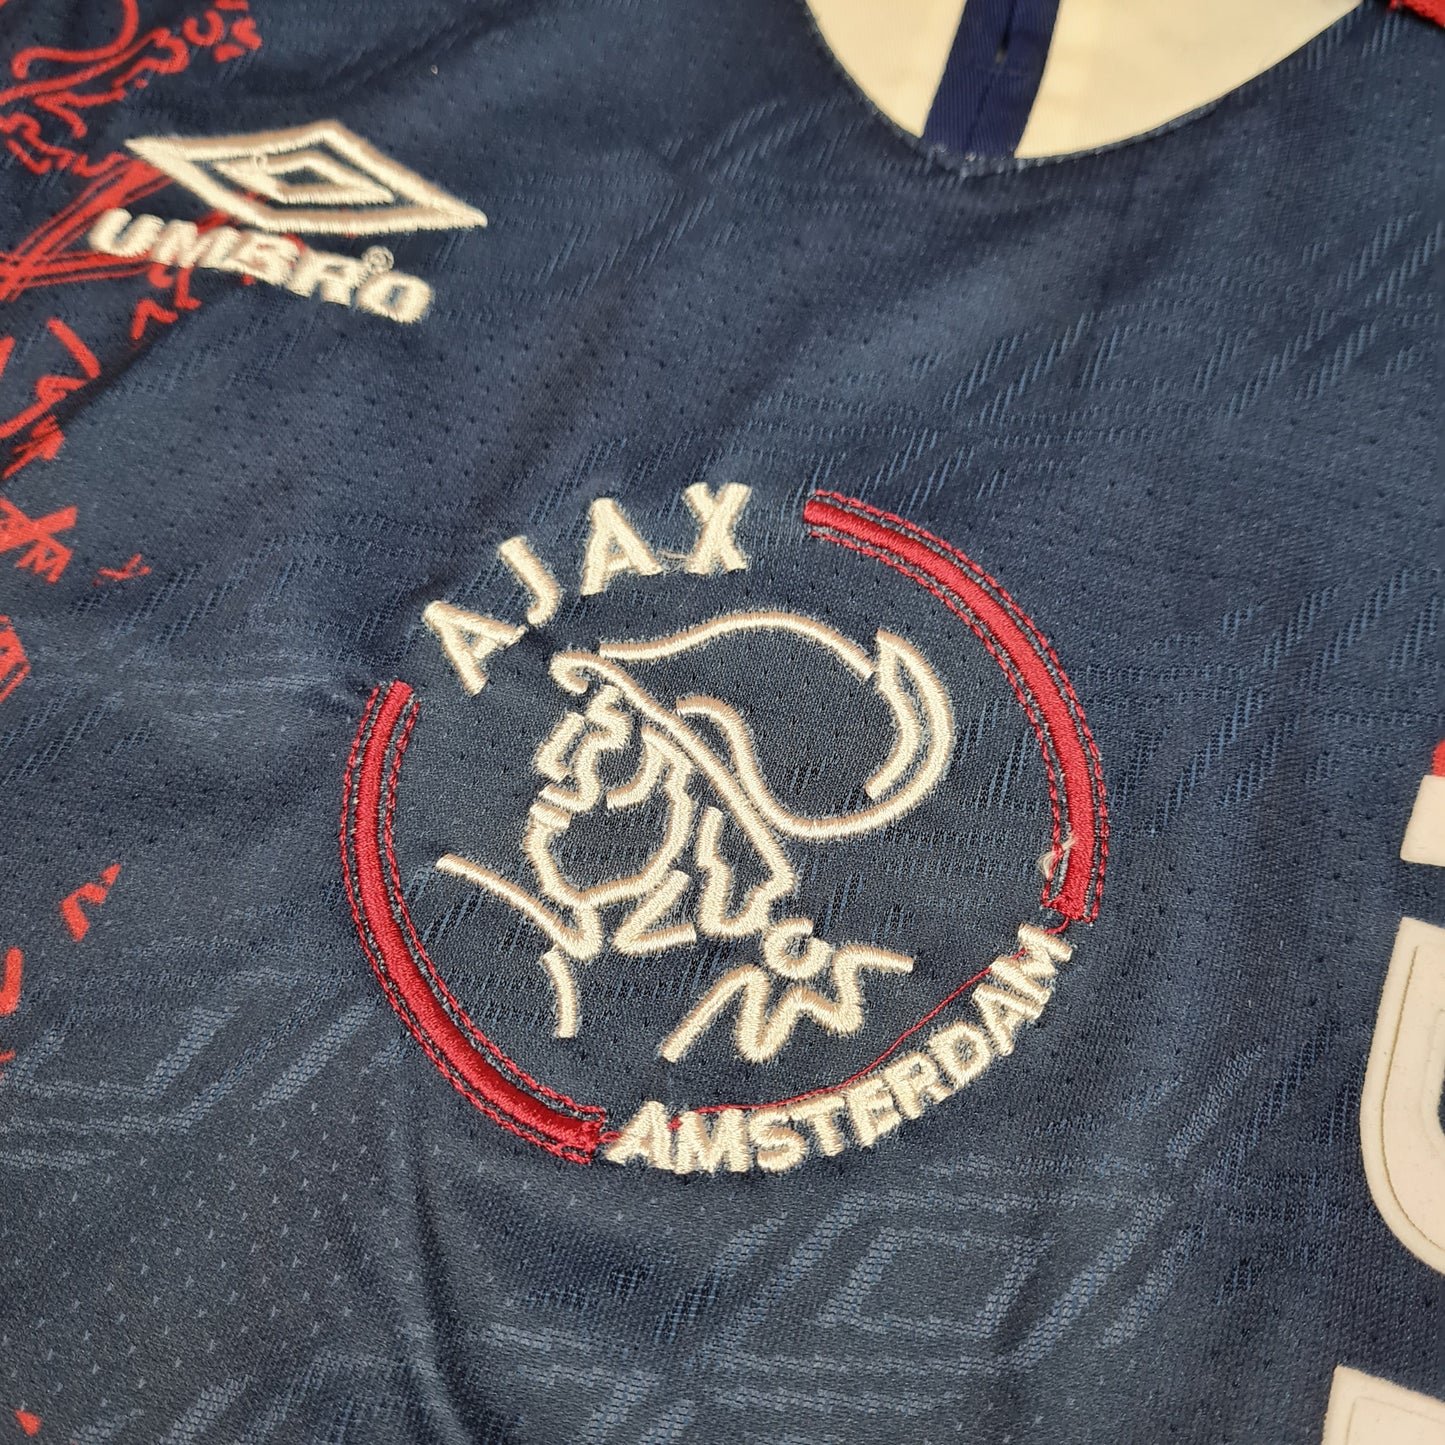 Ajax Suplente 1994/95 - Thunder Internacional